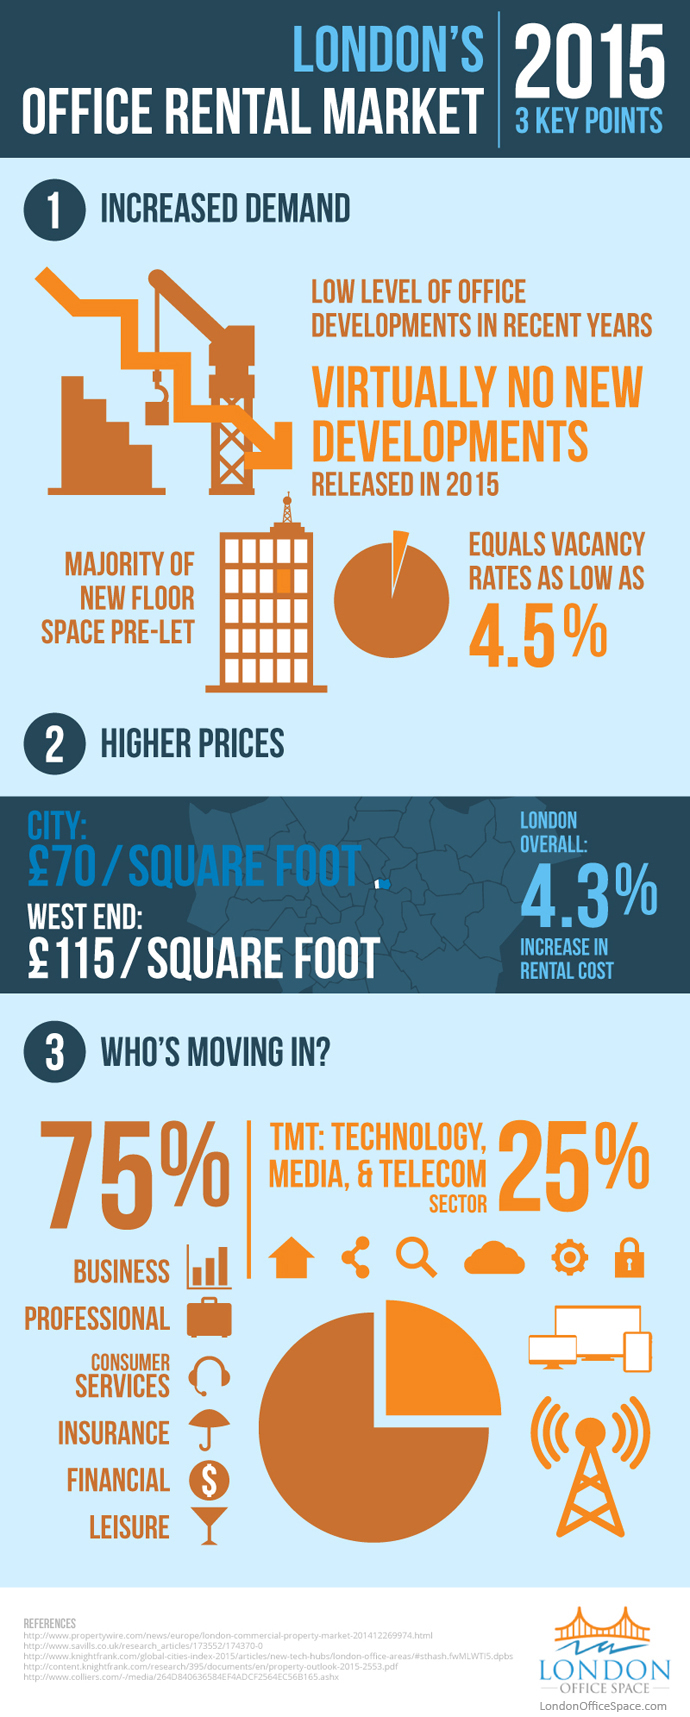 London's Office Rental Market Trends for 2015